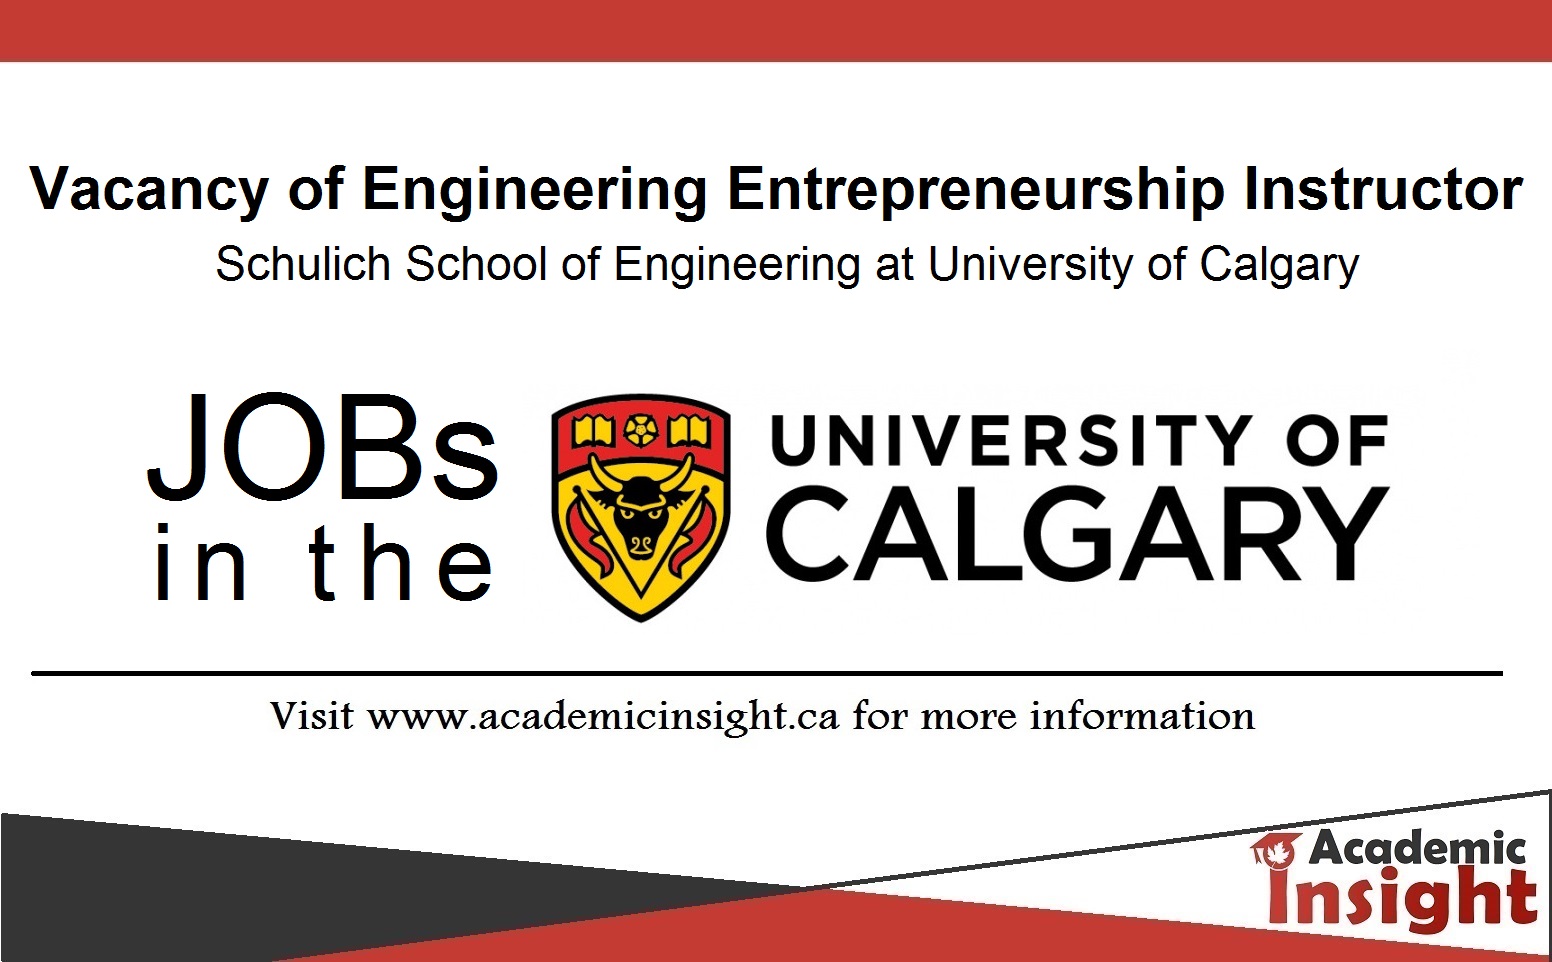 Instructor of Engineering Entrepreneurship Job at Schulich School of Engineering, University of Calgary